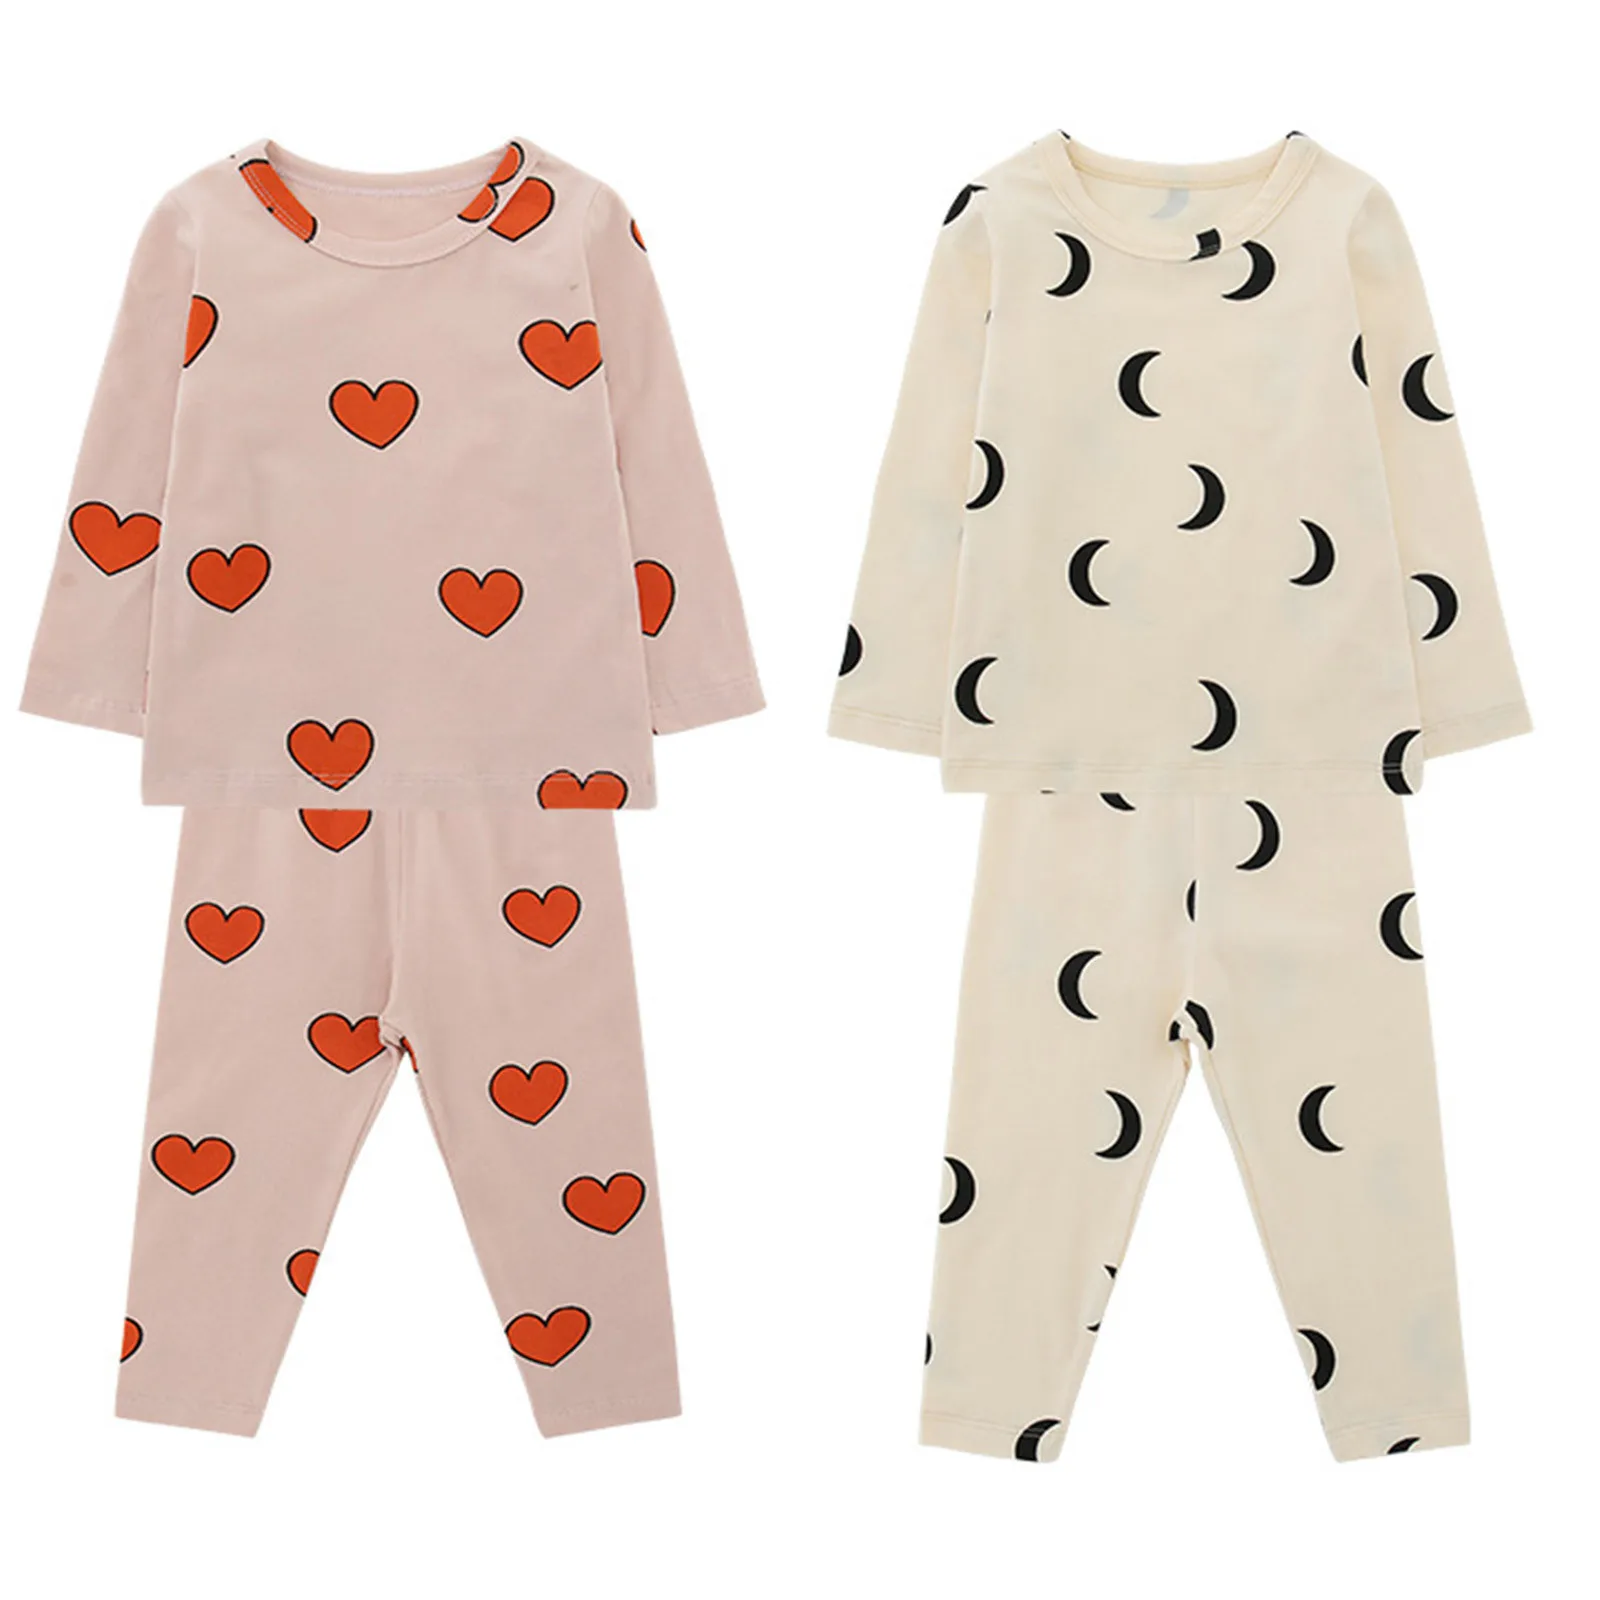 6M-4Y Toddler Kids Baby Love Moon Print Pajamas Sleepwear Tops Pants Outfits Sets baby sleepsuit baby kleding meisje E1